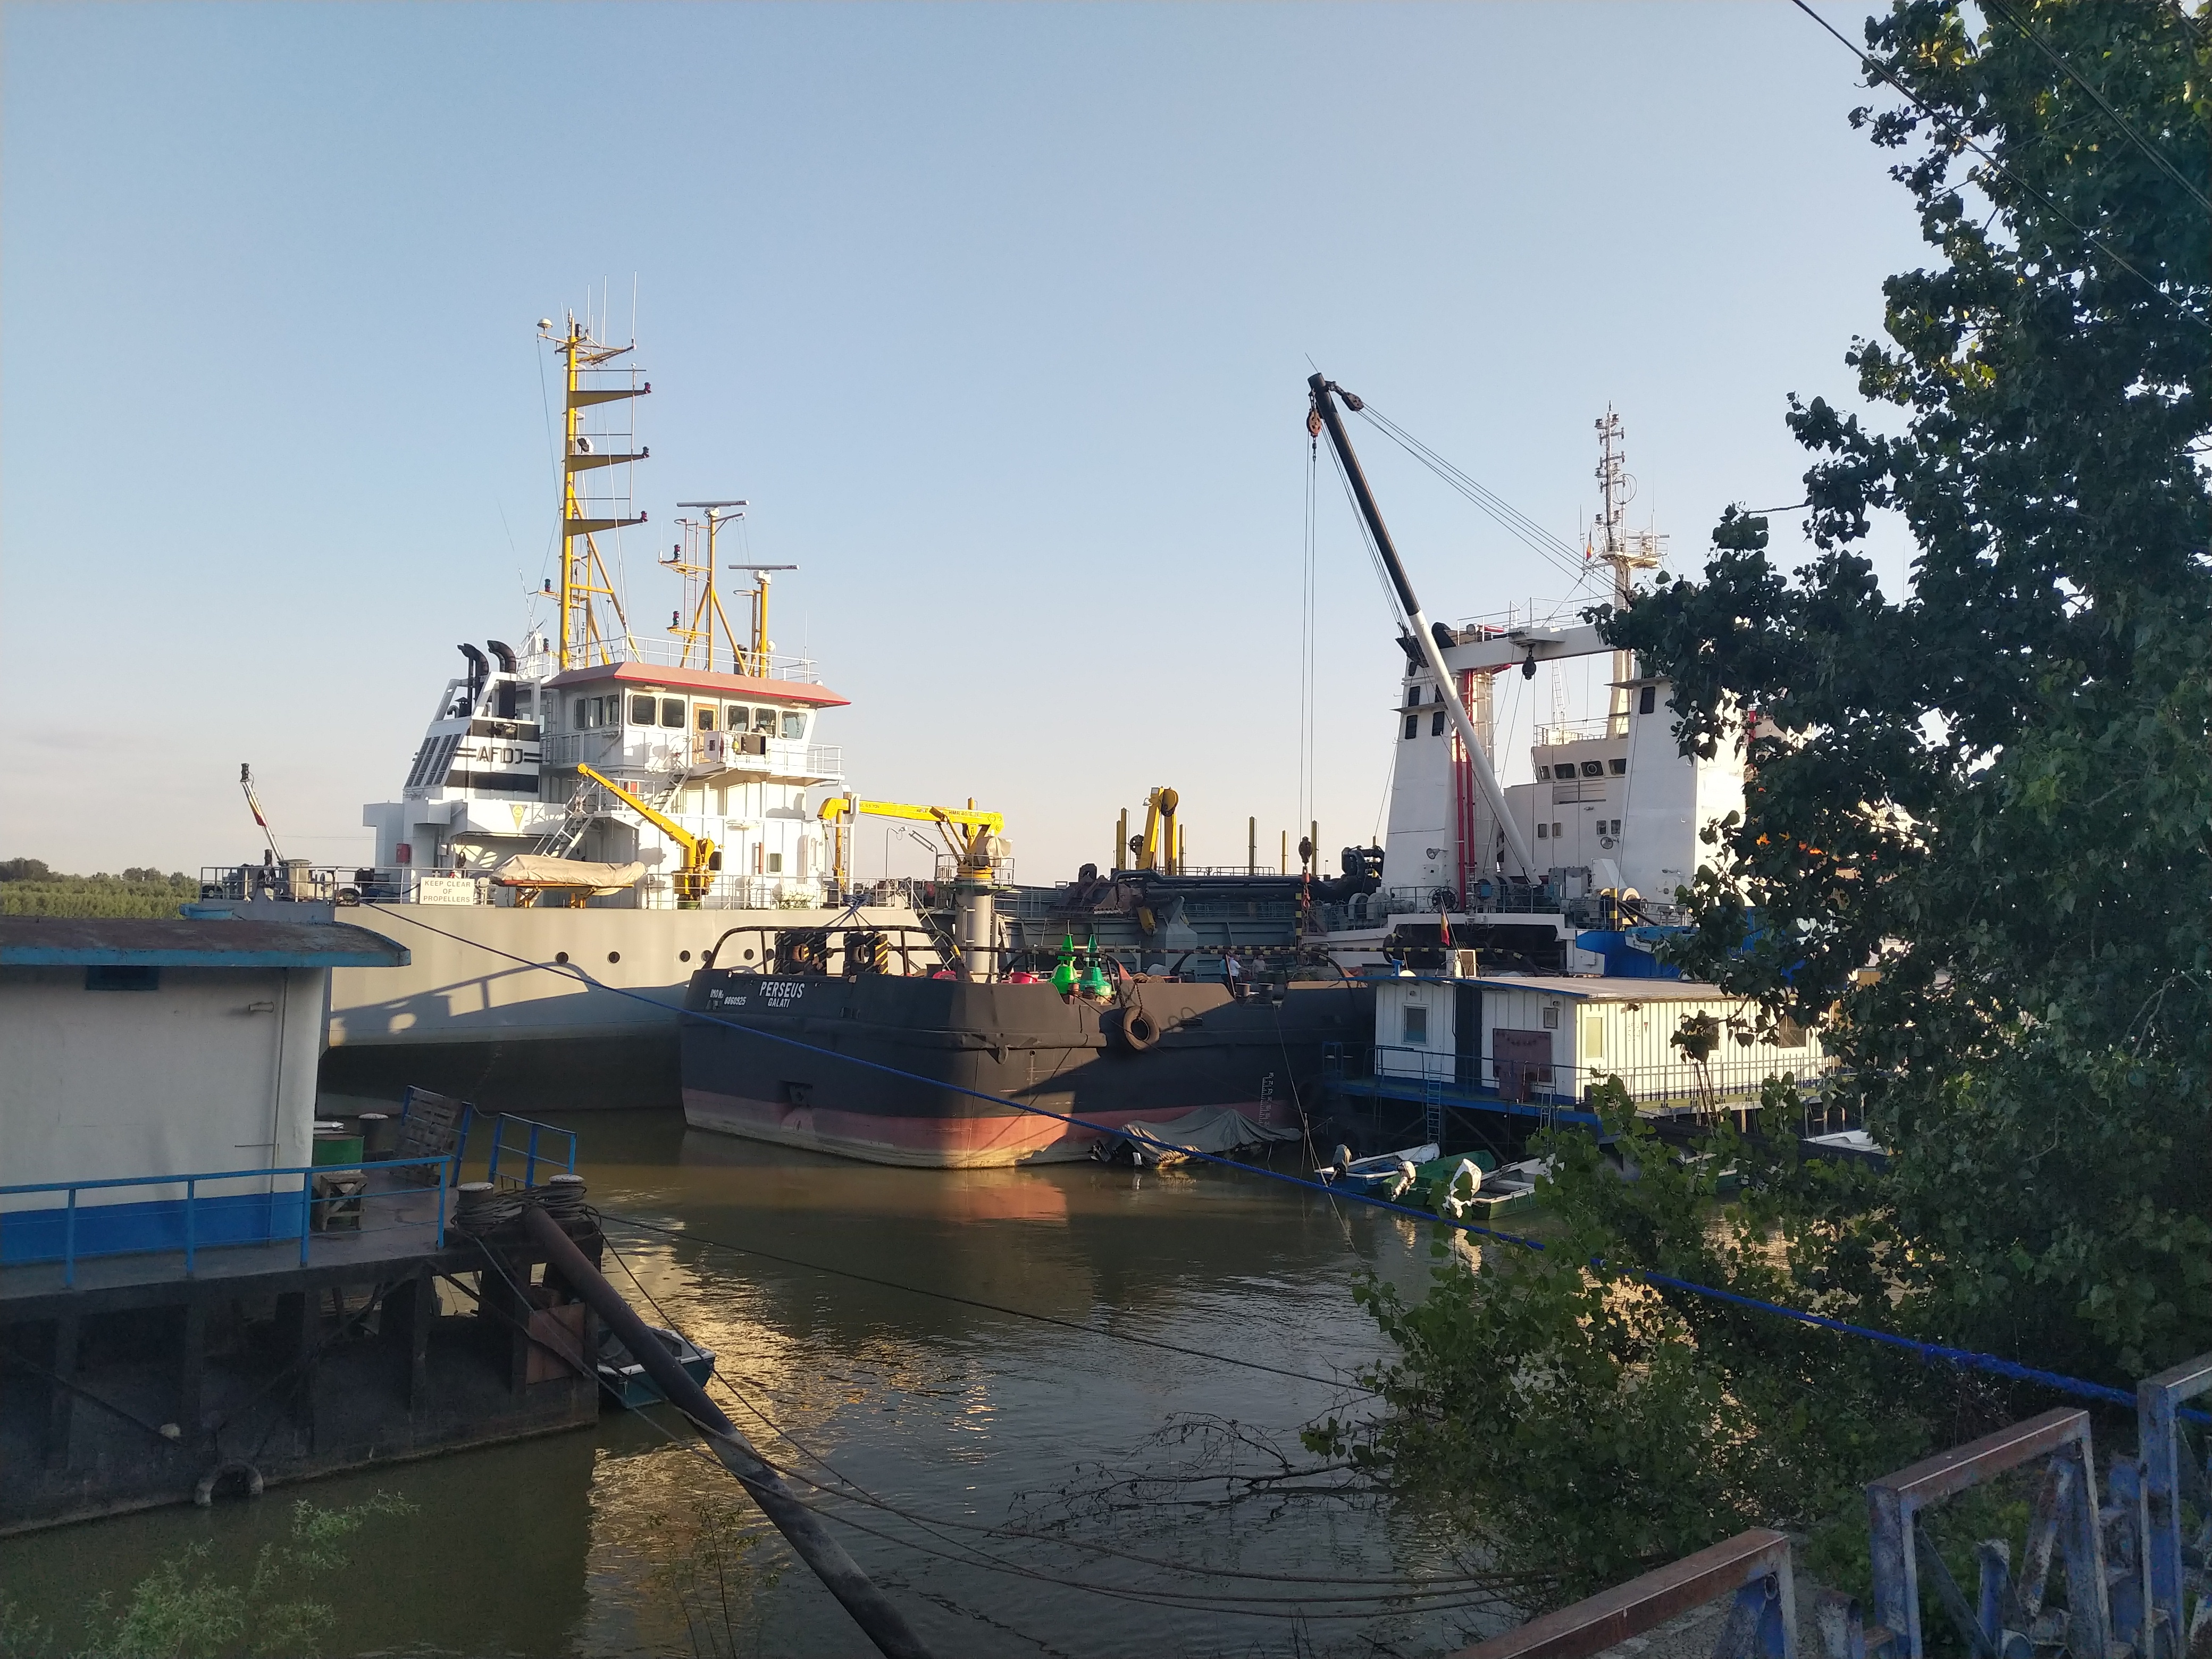 RO, Vapoare Ancorate in Portul Galati